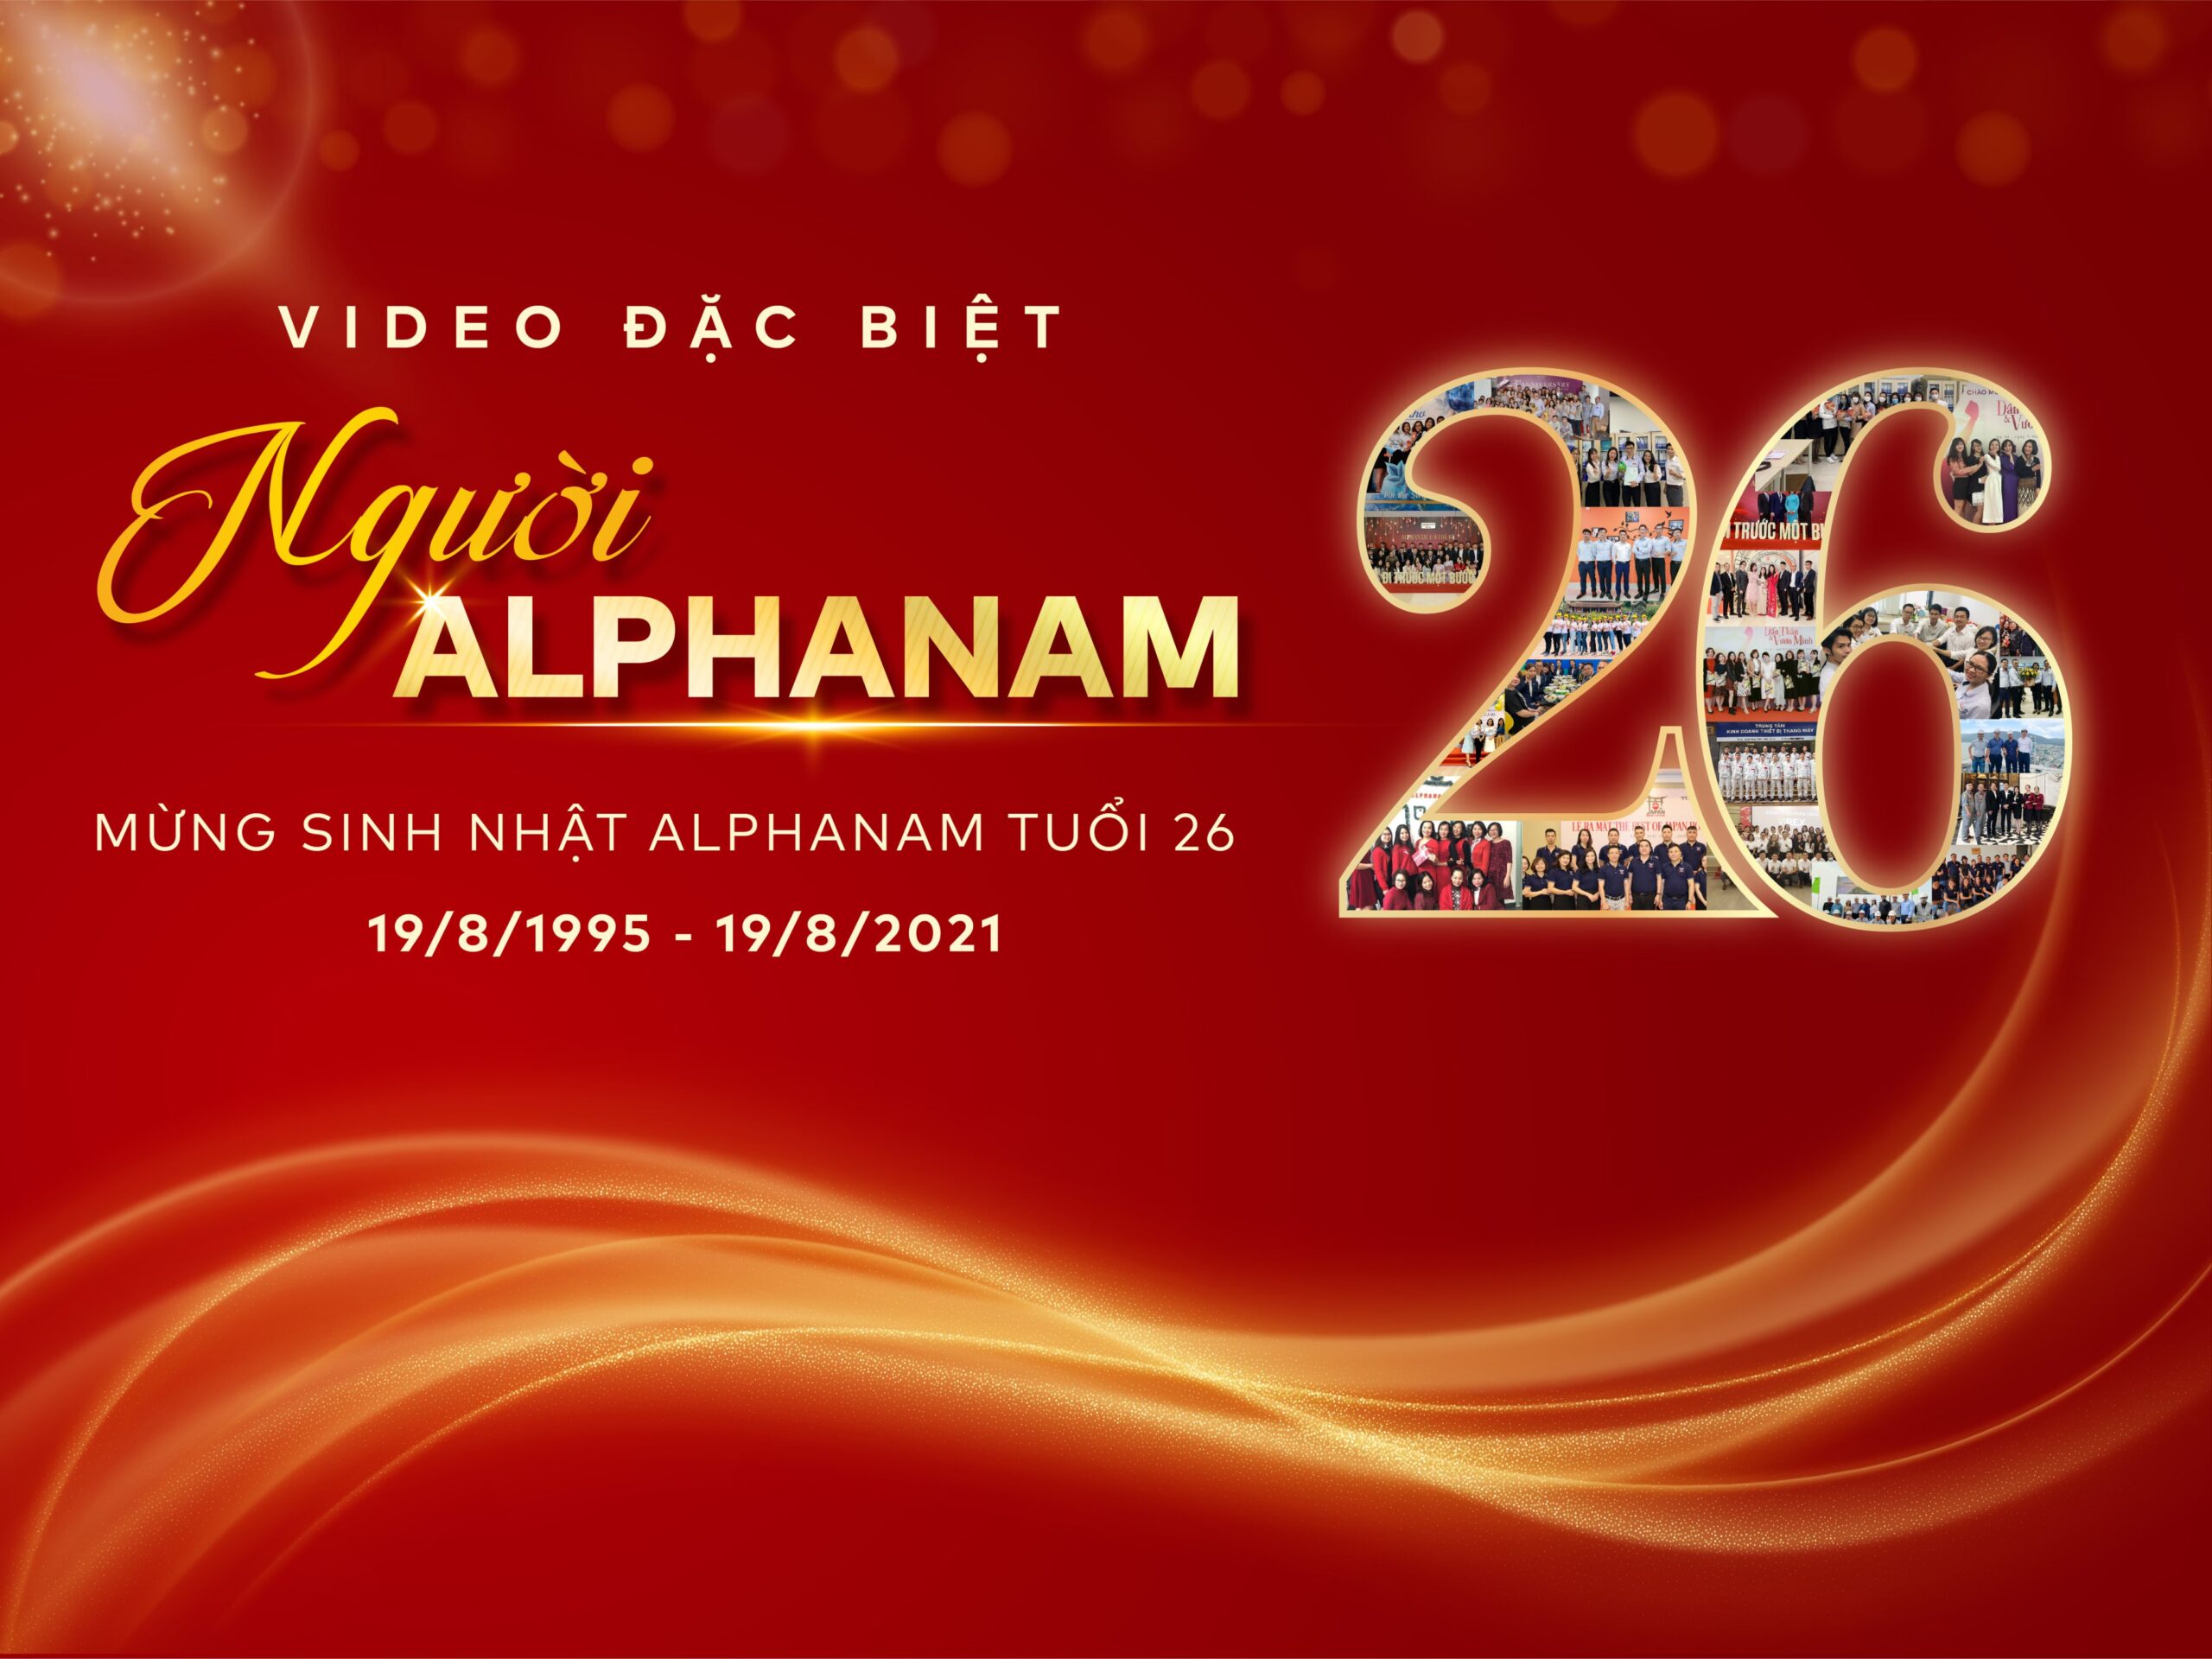 Read more about the article “NGƯỜI ALPHANAM” – VIDEO MỪNG SINH NHẬT ALPHANAM TUỔI 26